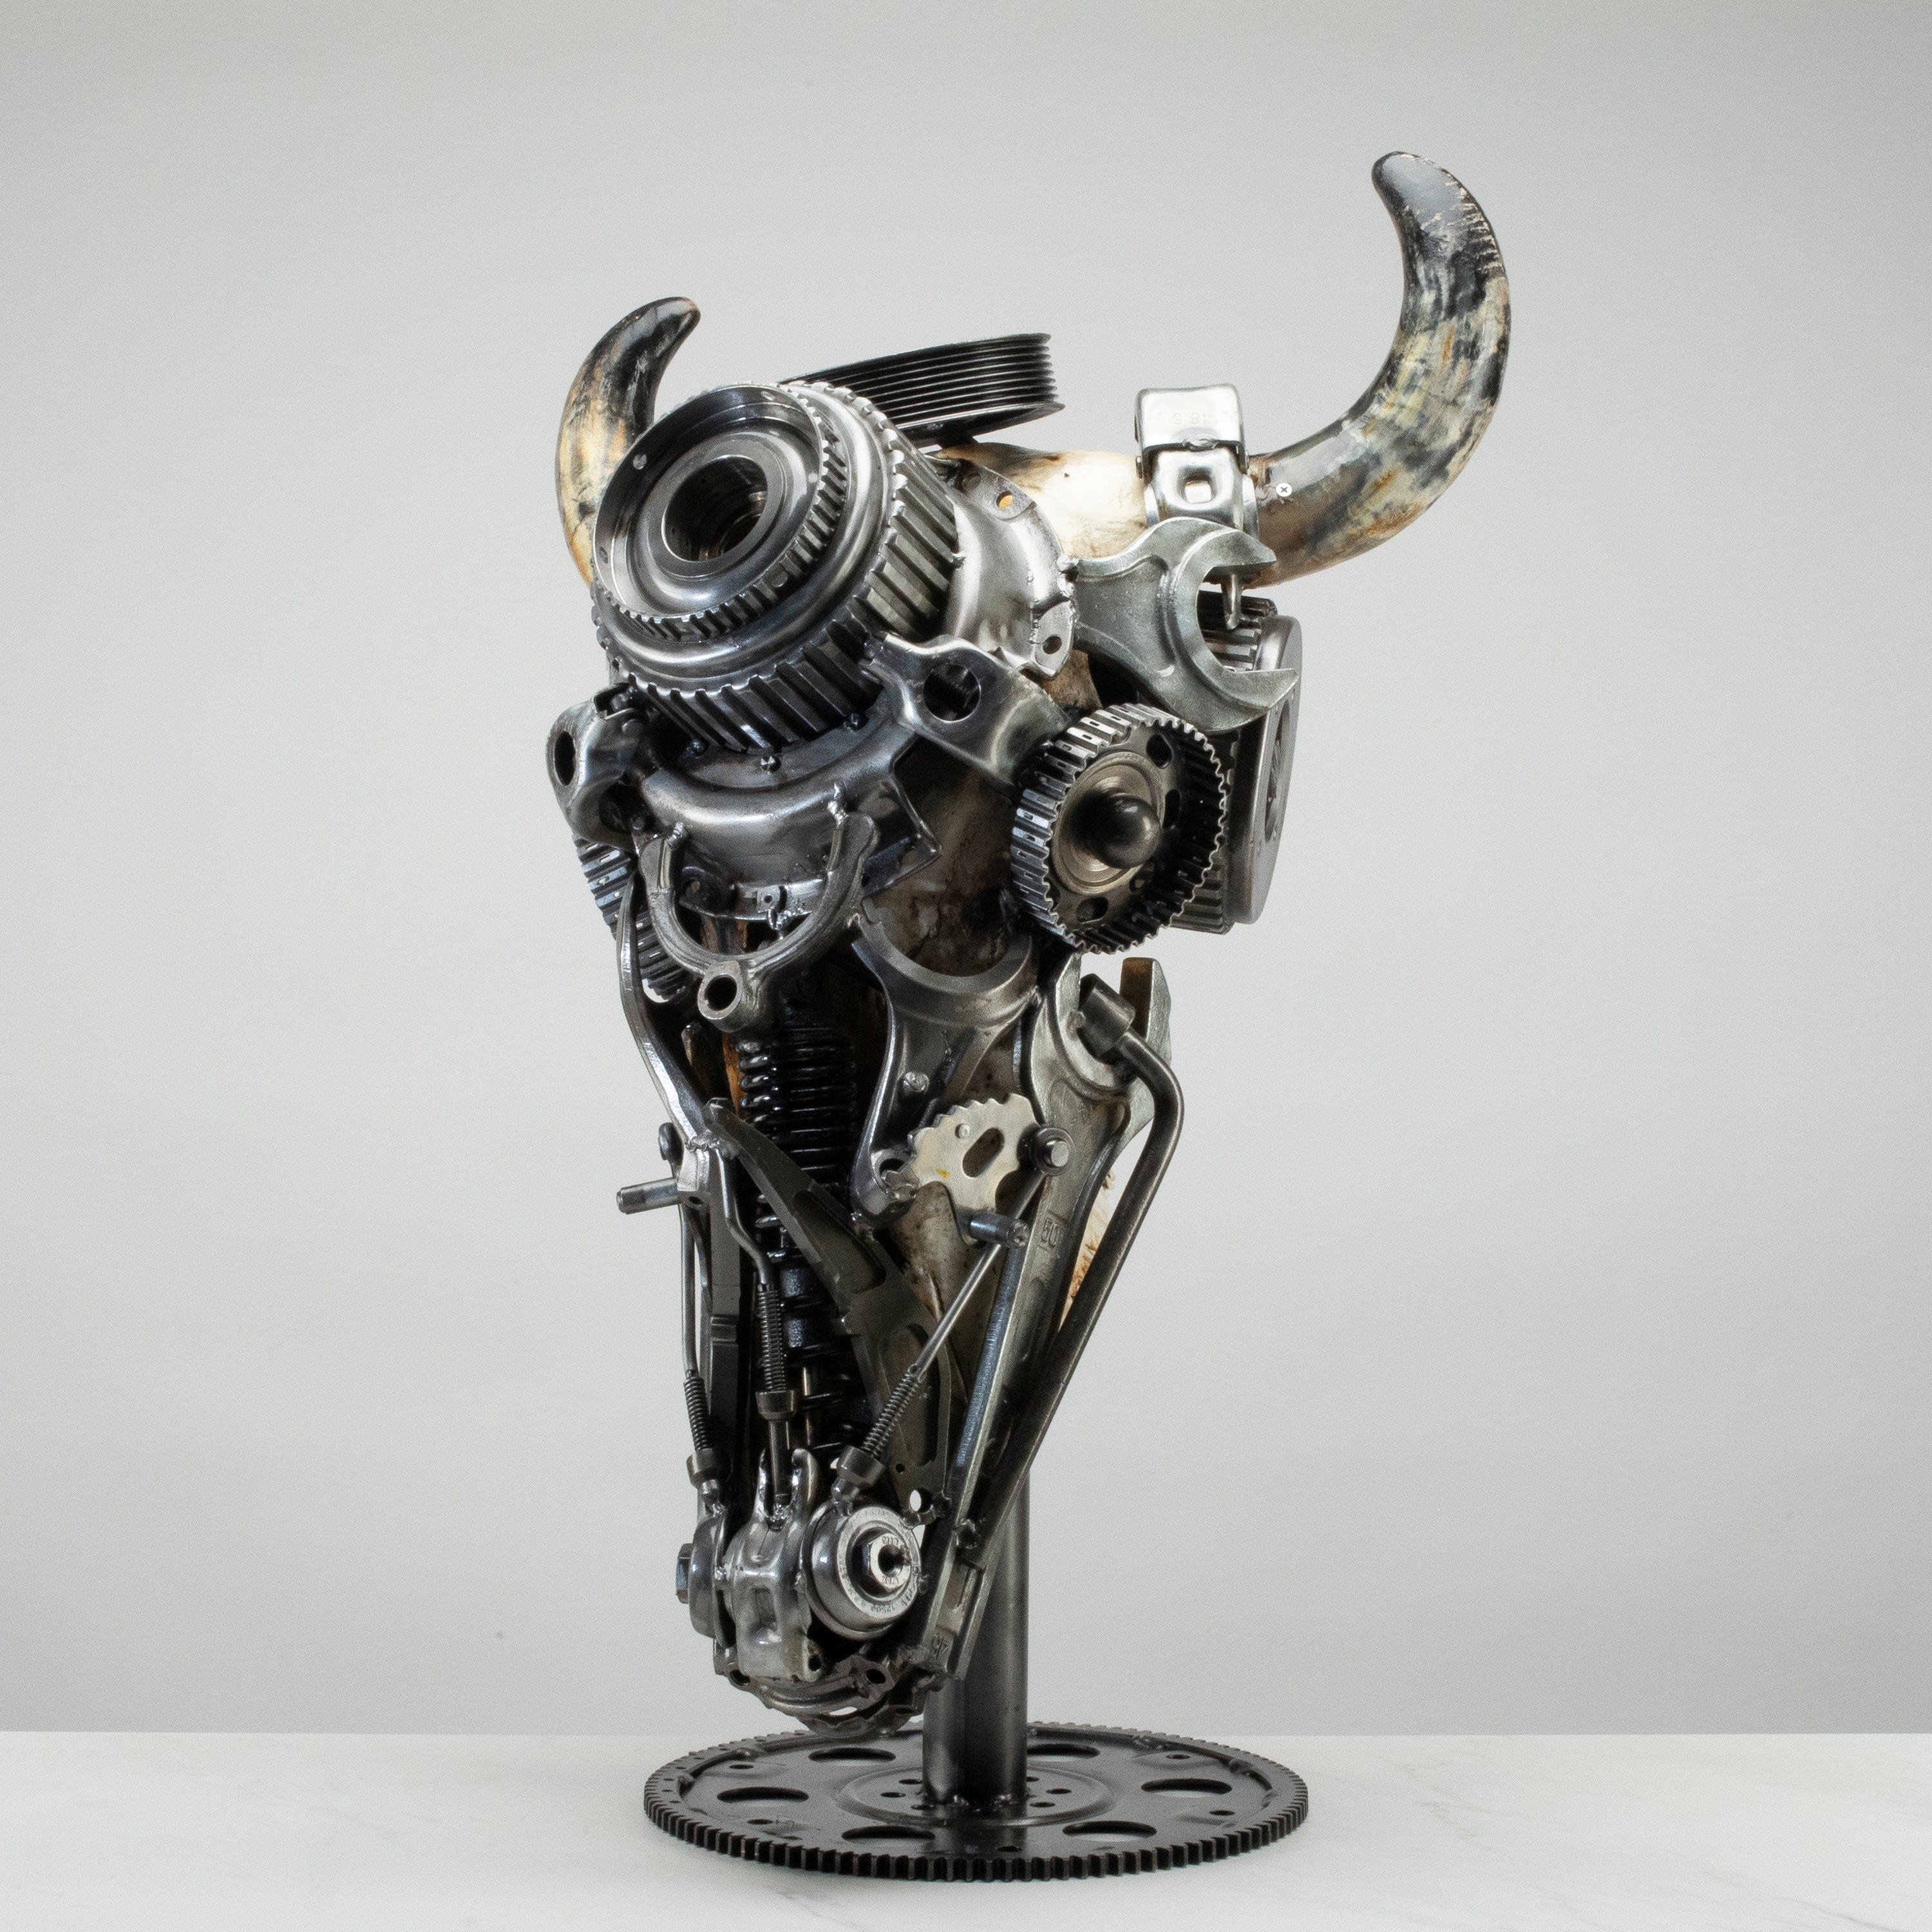 Kalifano Recycled Metal Art Bull Skull Recycled Metal Art Sculpture RMS-BSK-S141